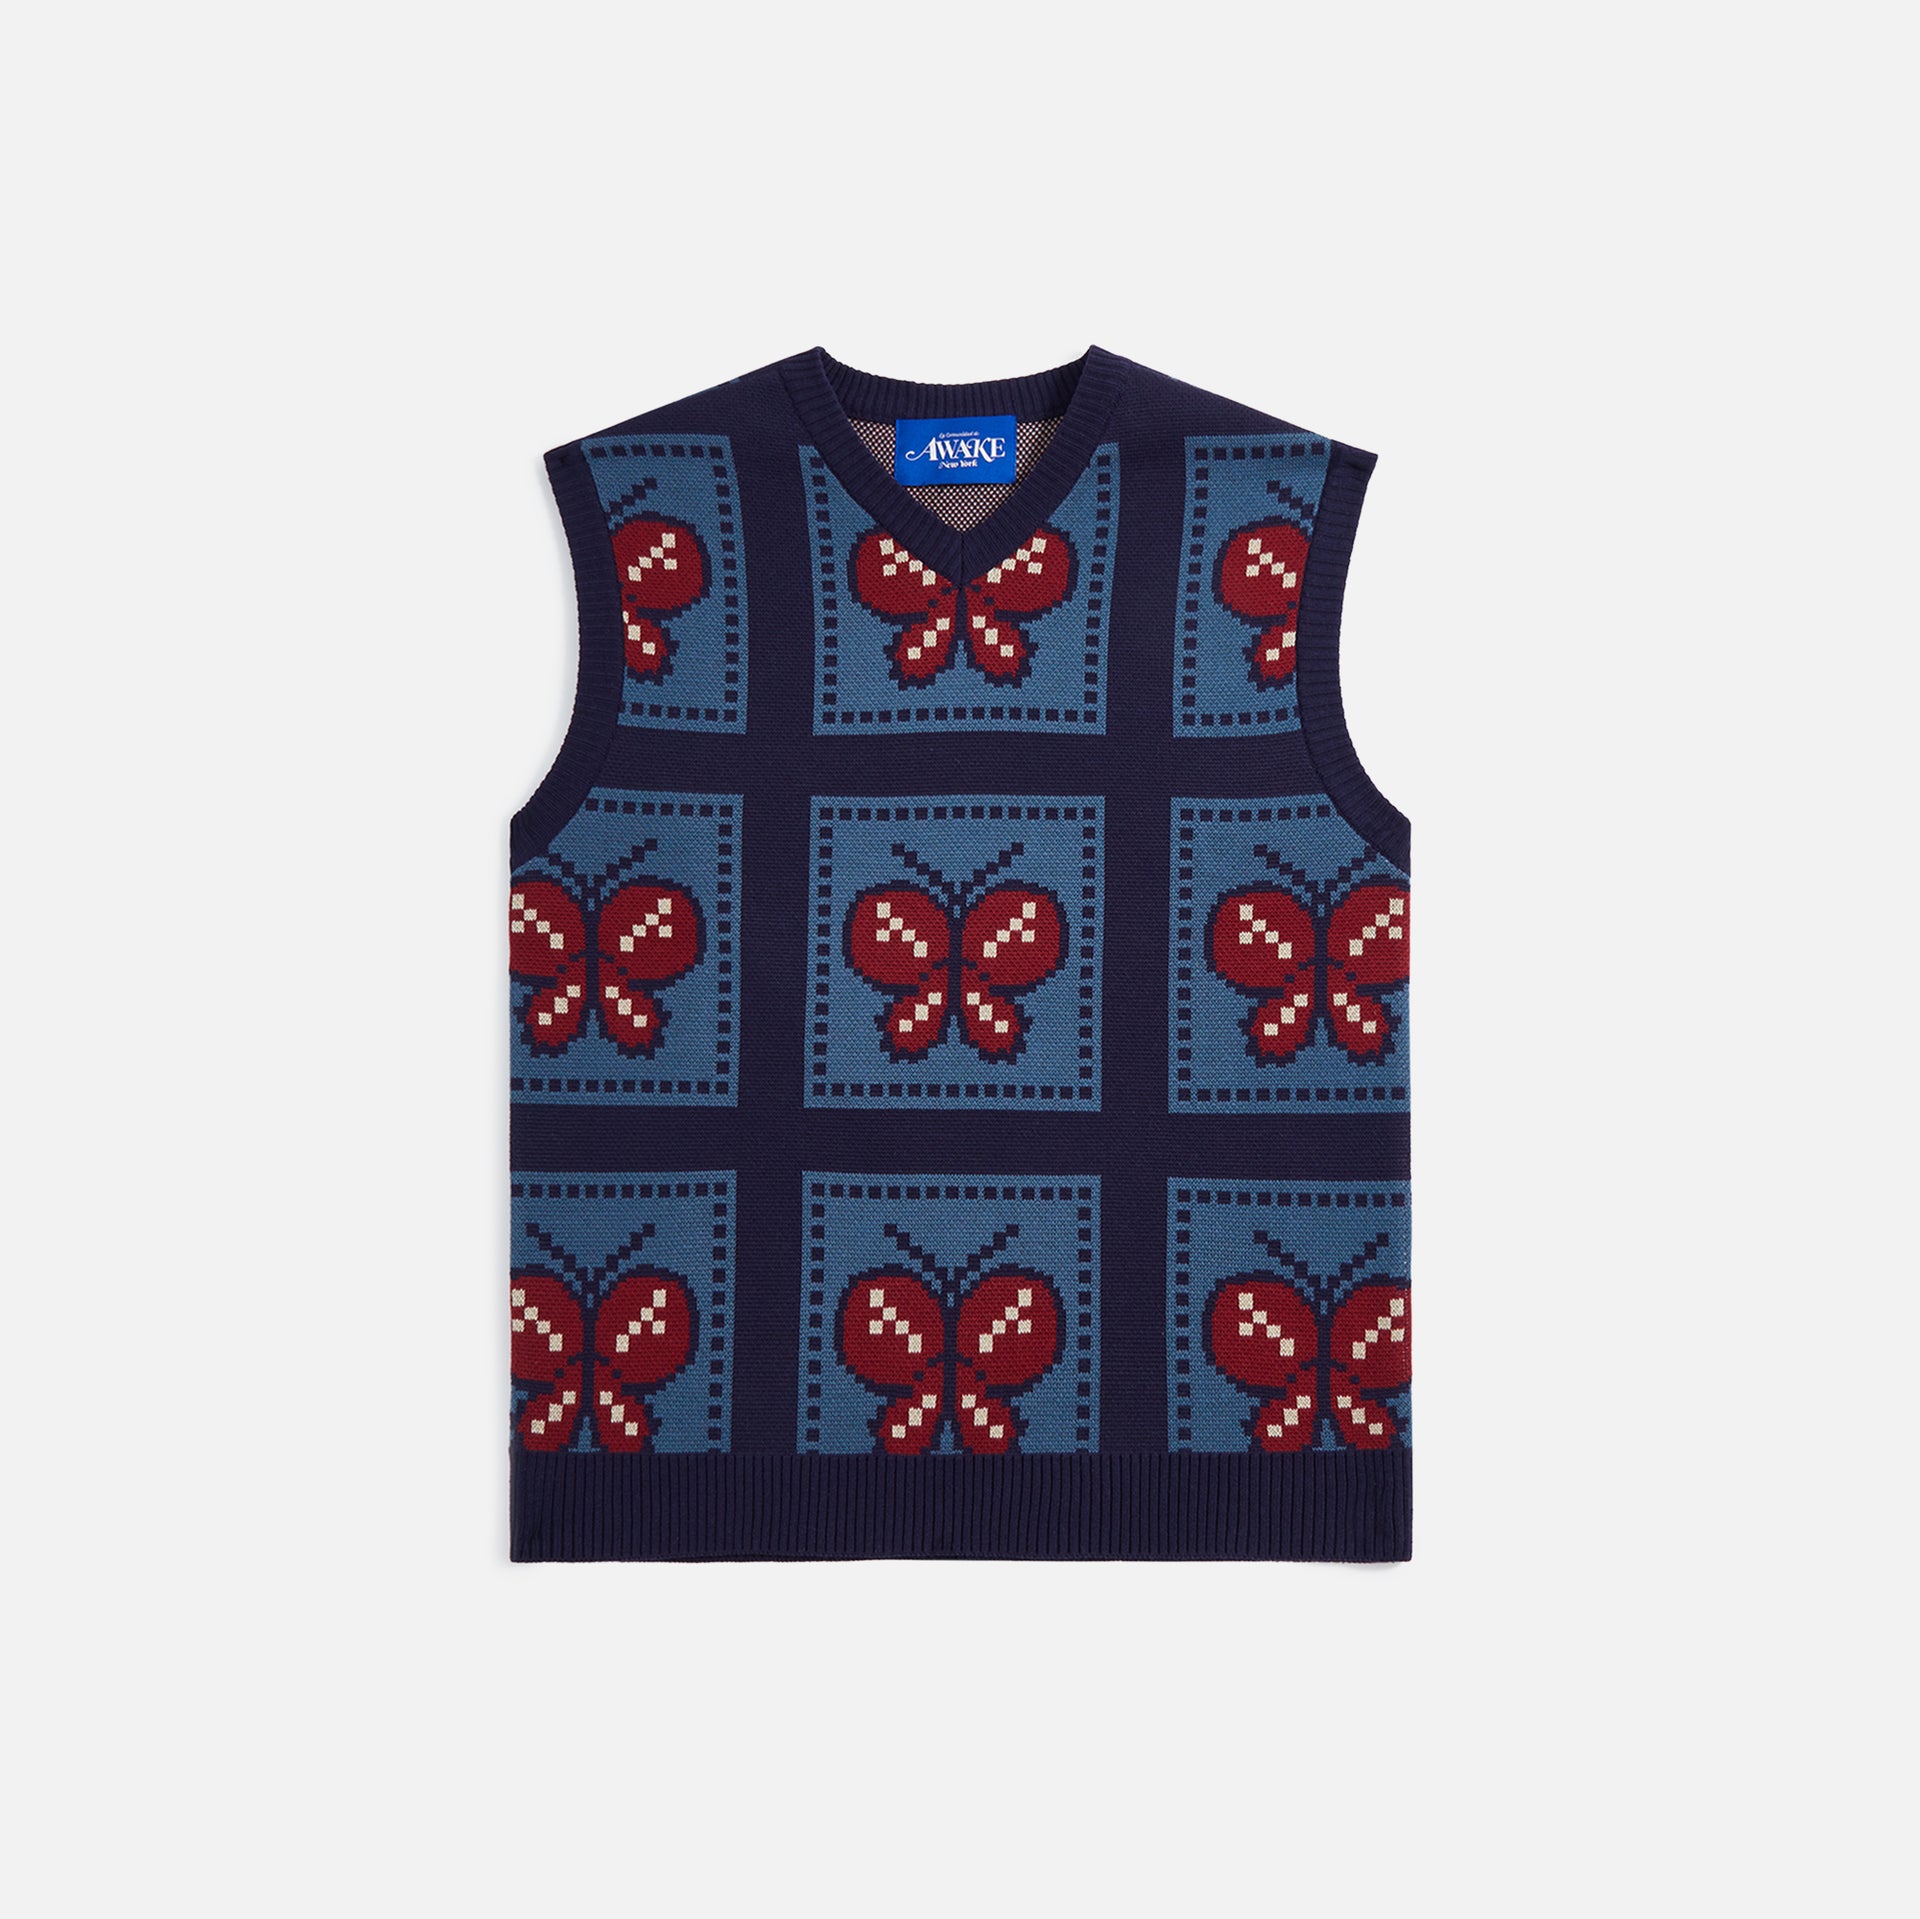 Awake Butterfly Sweater Vest - Blue / Red